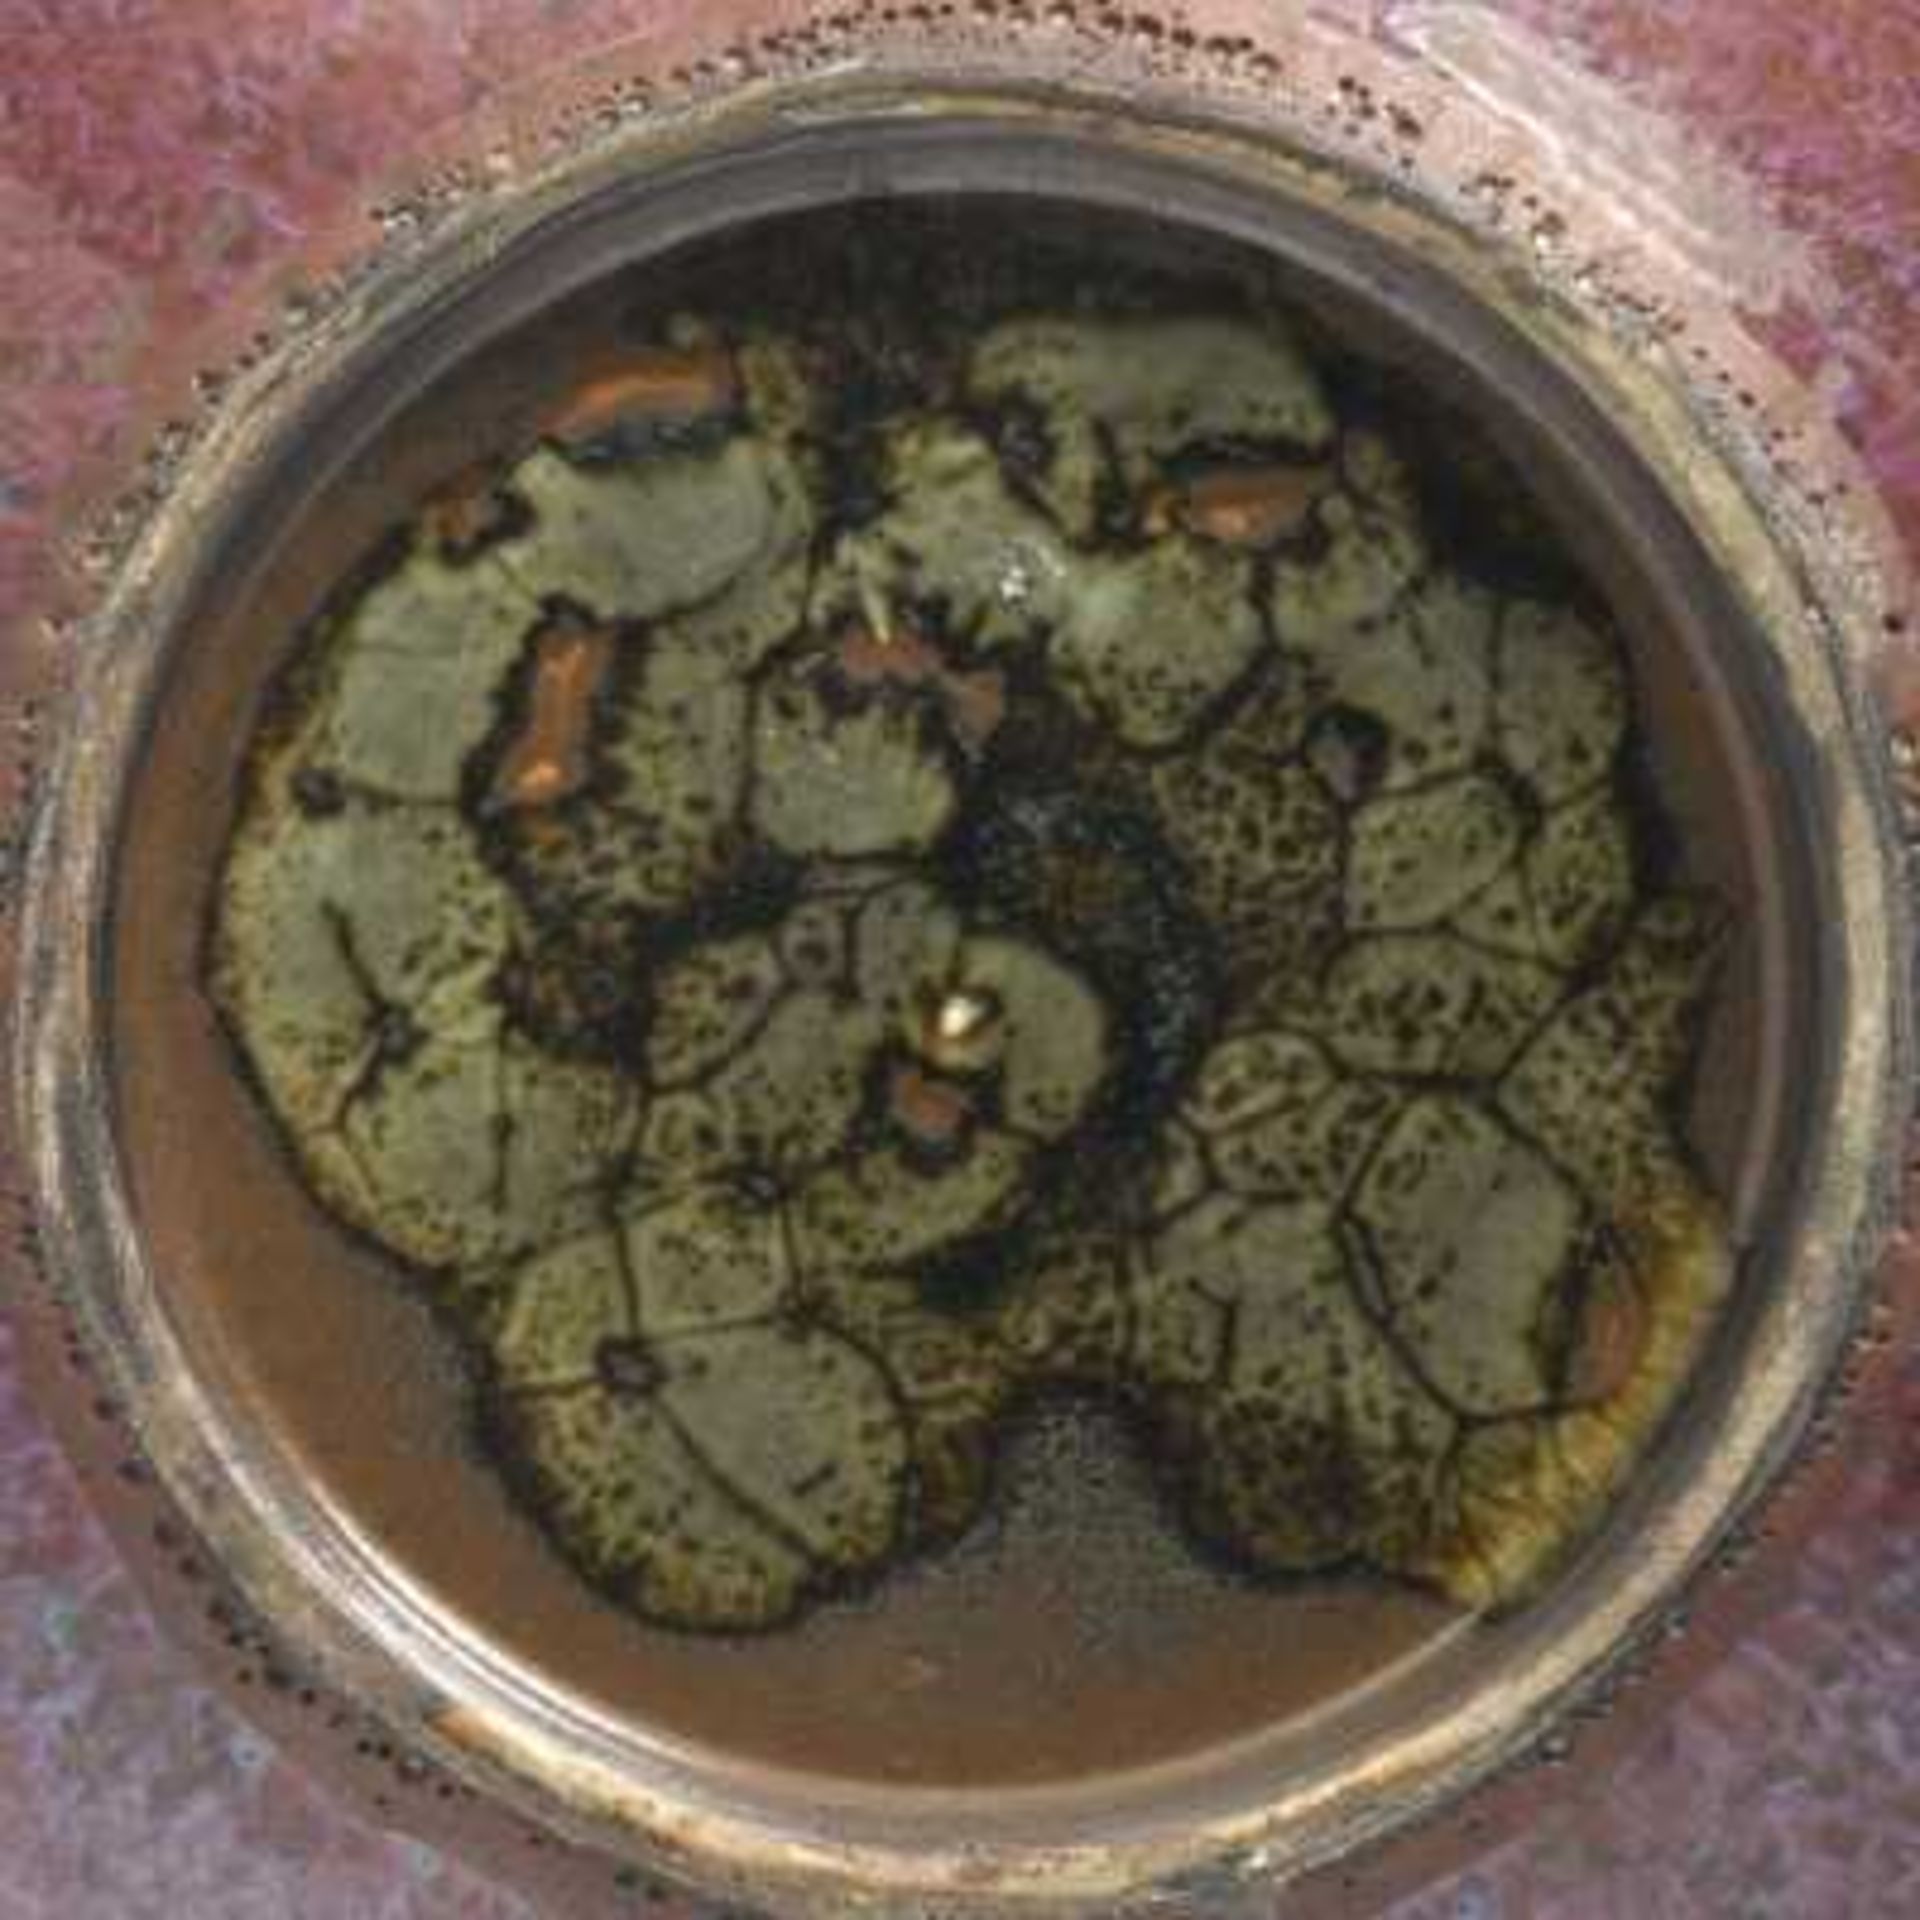 Doppelkürbisvase China, 19. Jh. Porzellan. Ochsenblutglasur. H. 32,5 cm. - Bild 2 aus 2